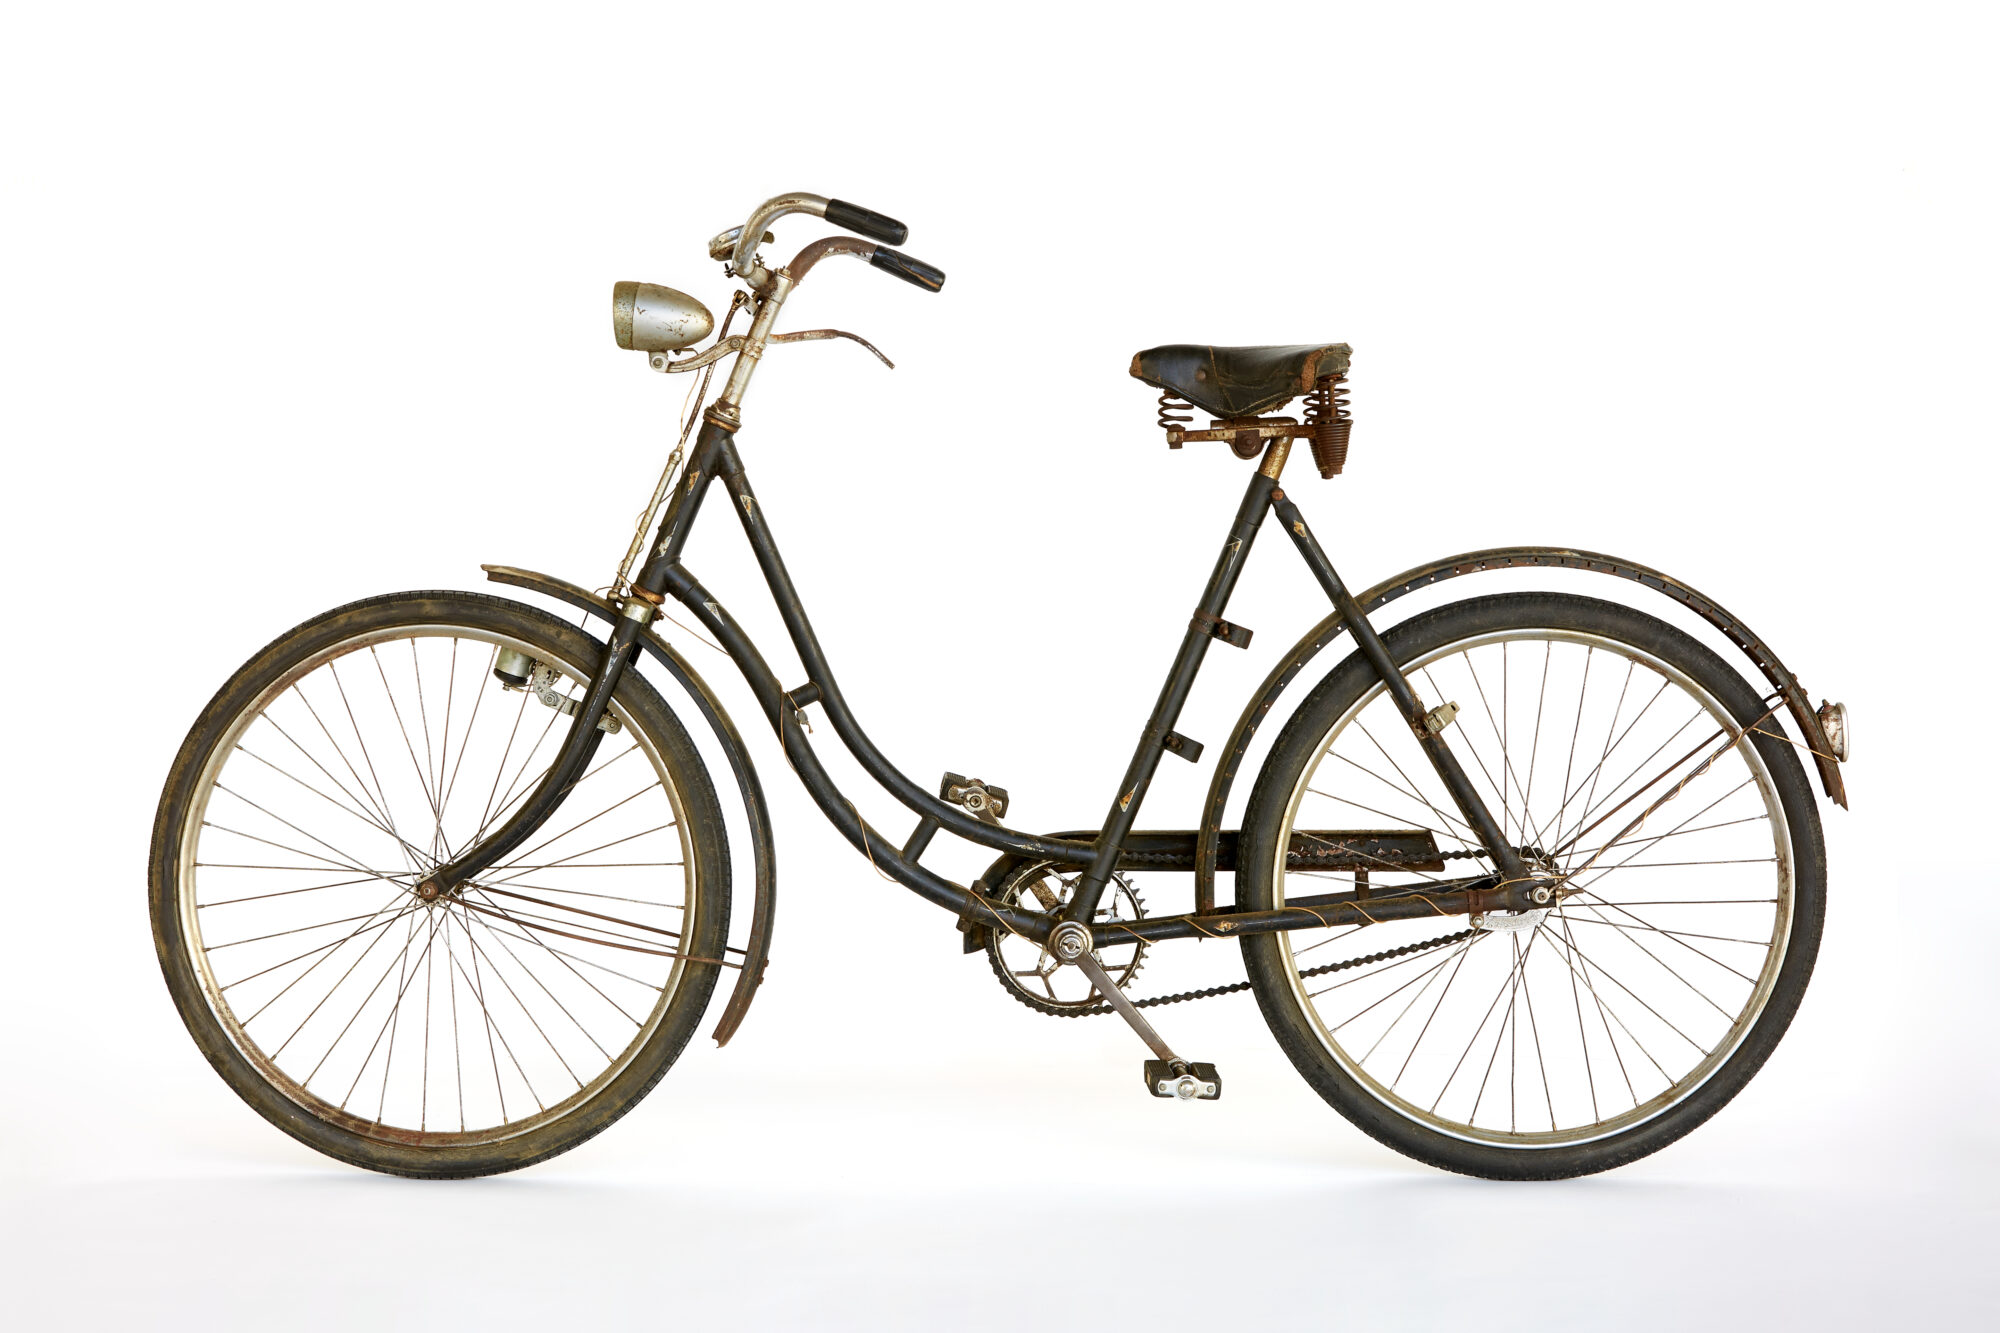 Max Frankenburger: Bicycle pioneer